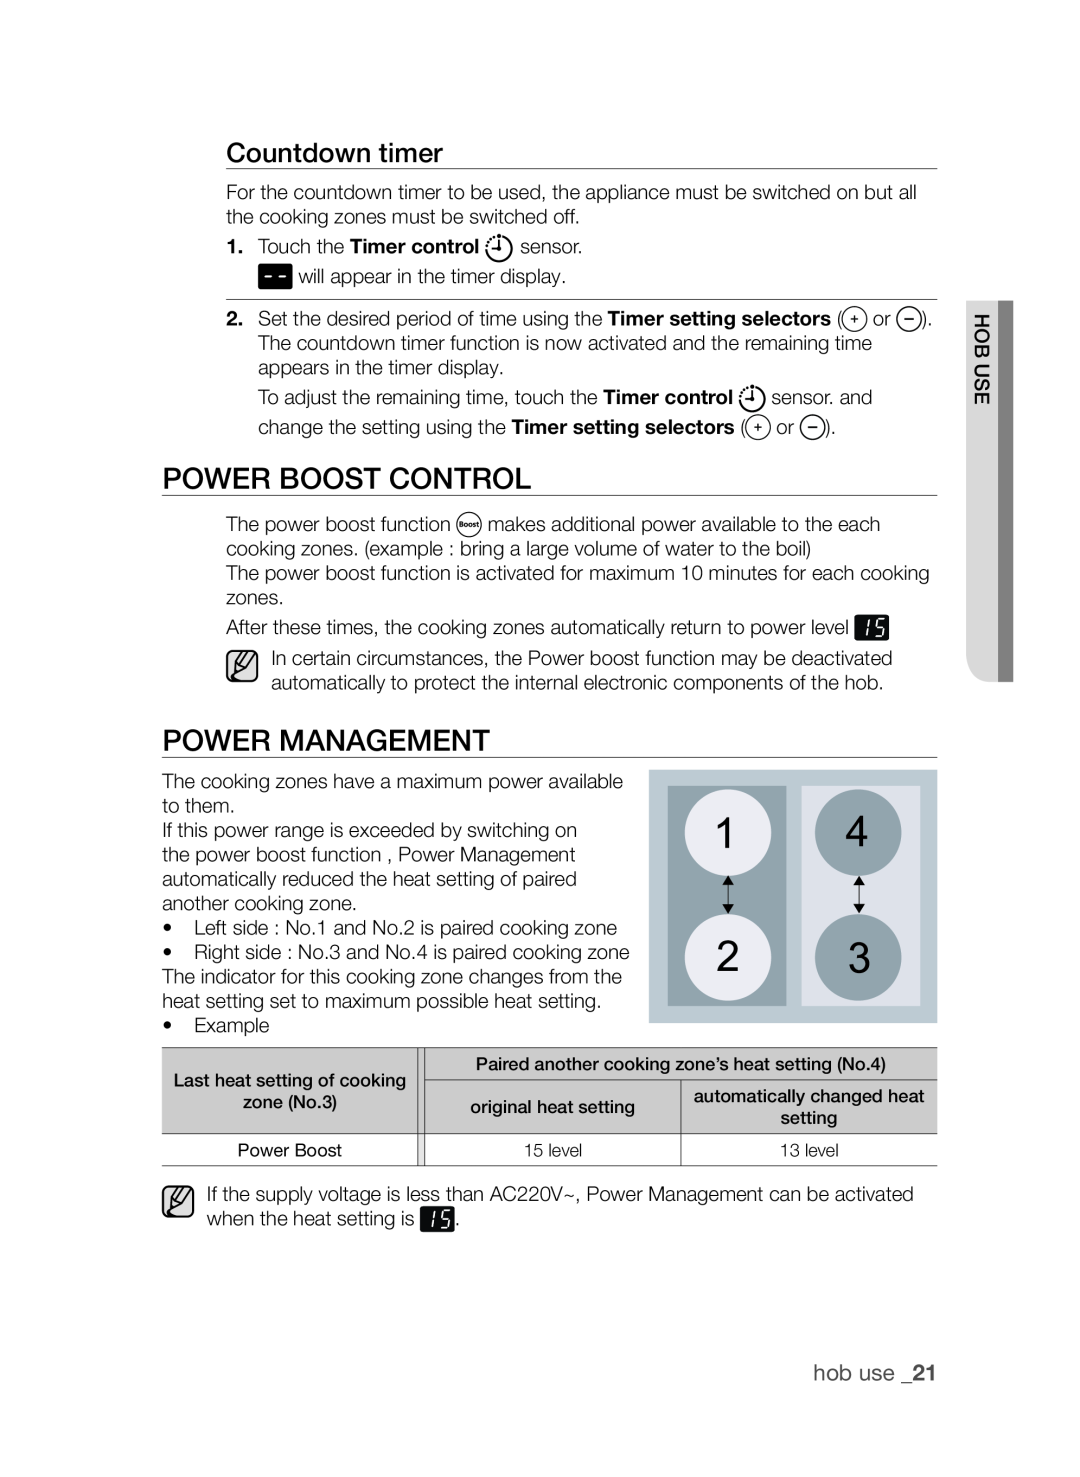 Samsung CTI613EH, CTN364D001 user manual Power boost control, Power Management, Countdown timer, hob use 